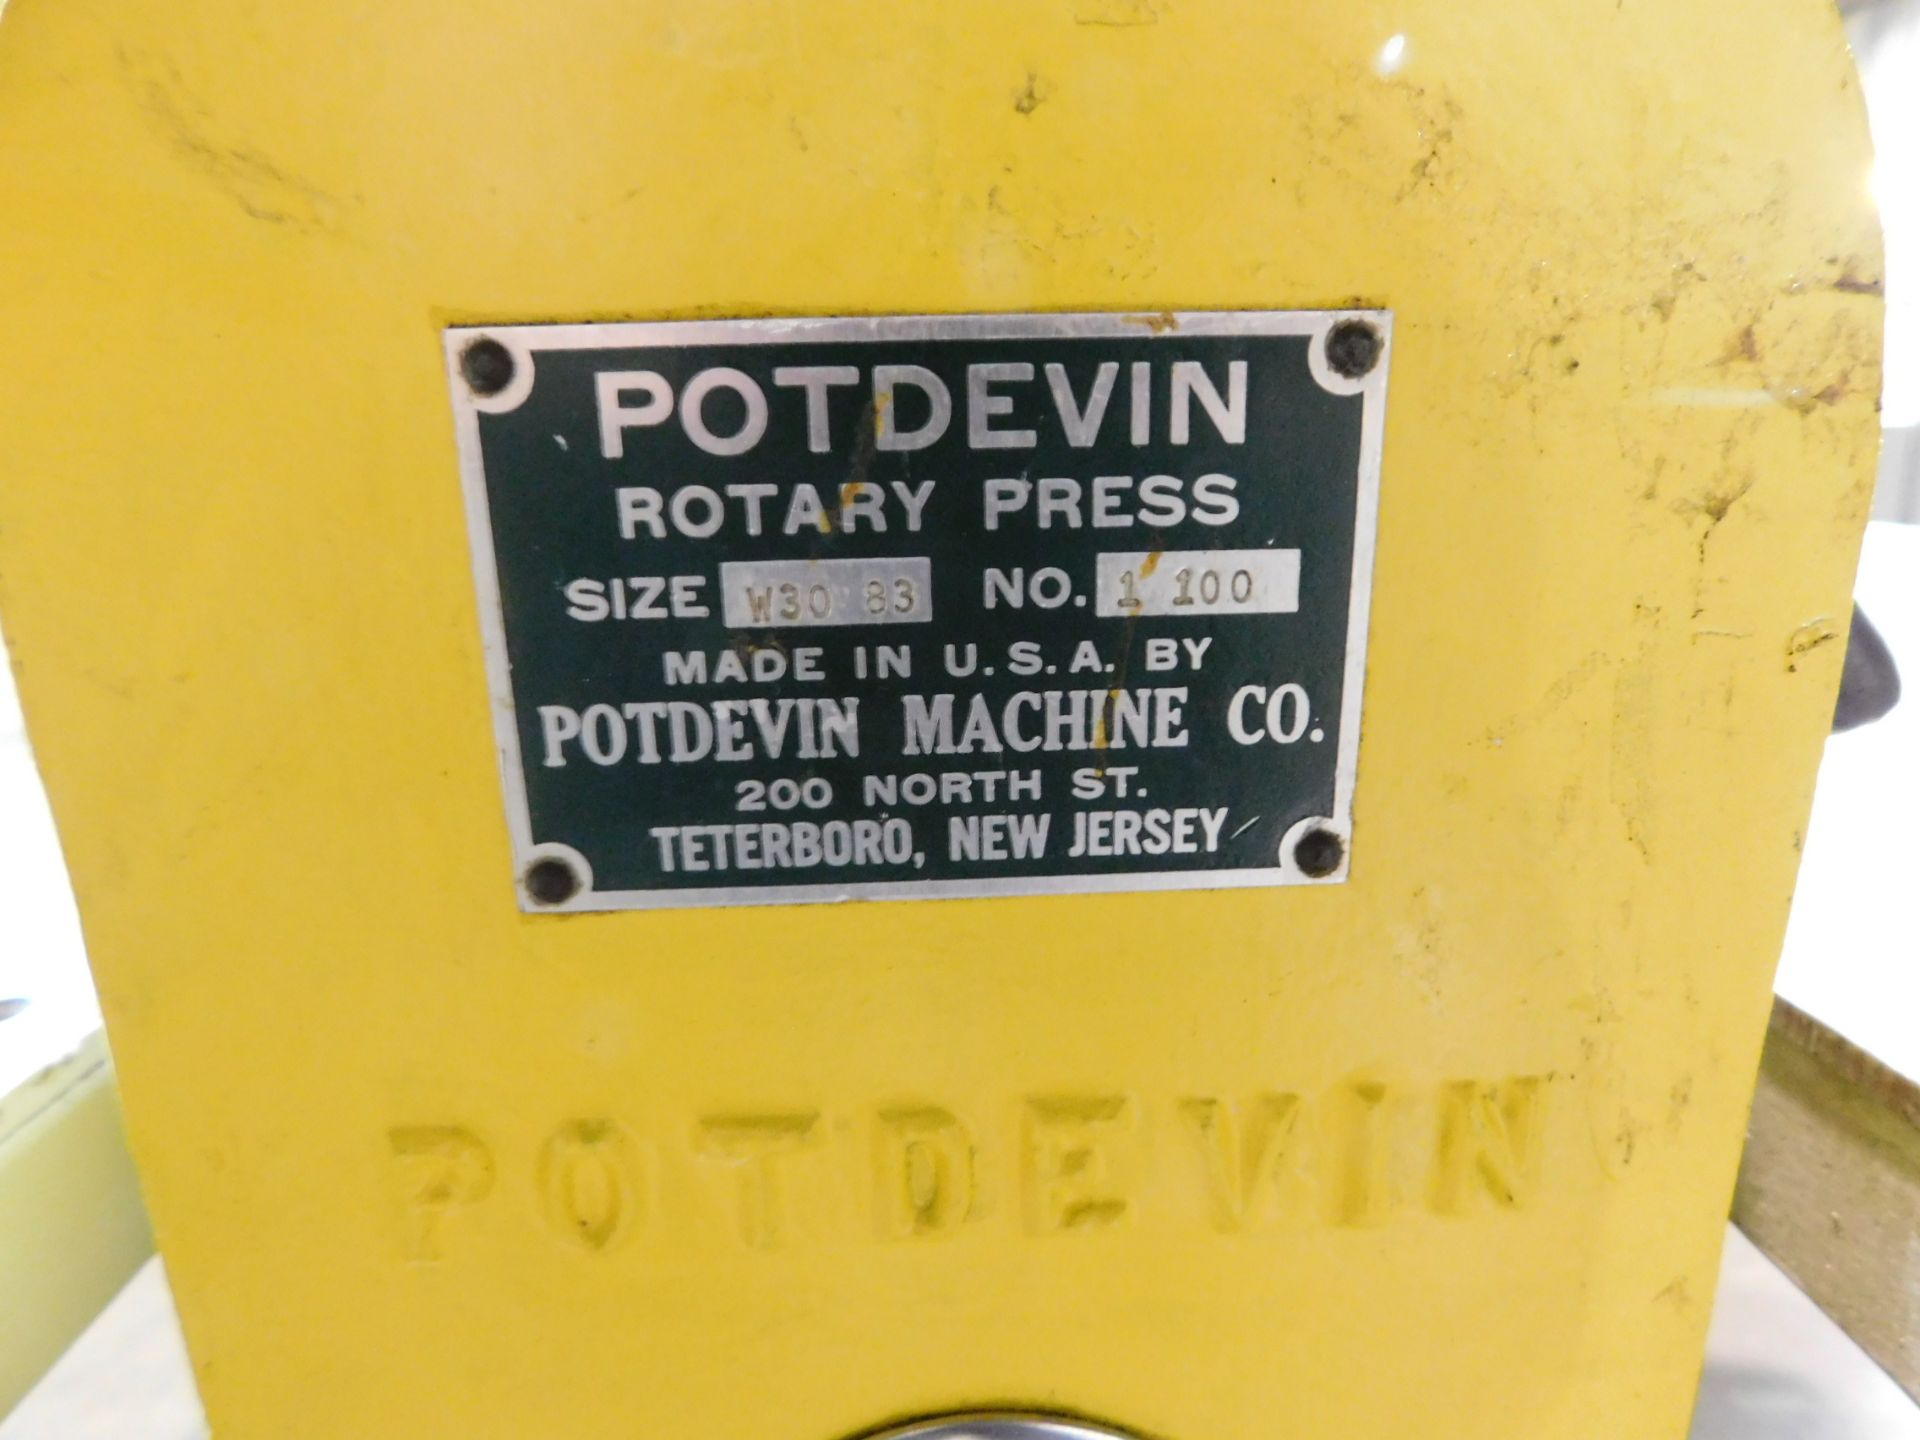 Potdevin Model W-30-83 Rotary Press, s/n 1-100, Vari Speed Drive, 110/1/60, 30" Width Capacity, Foot - Image 8 of 8